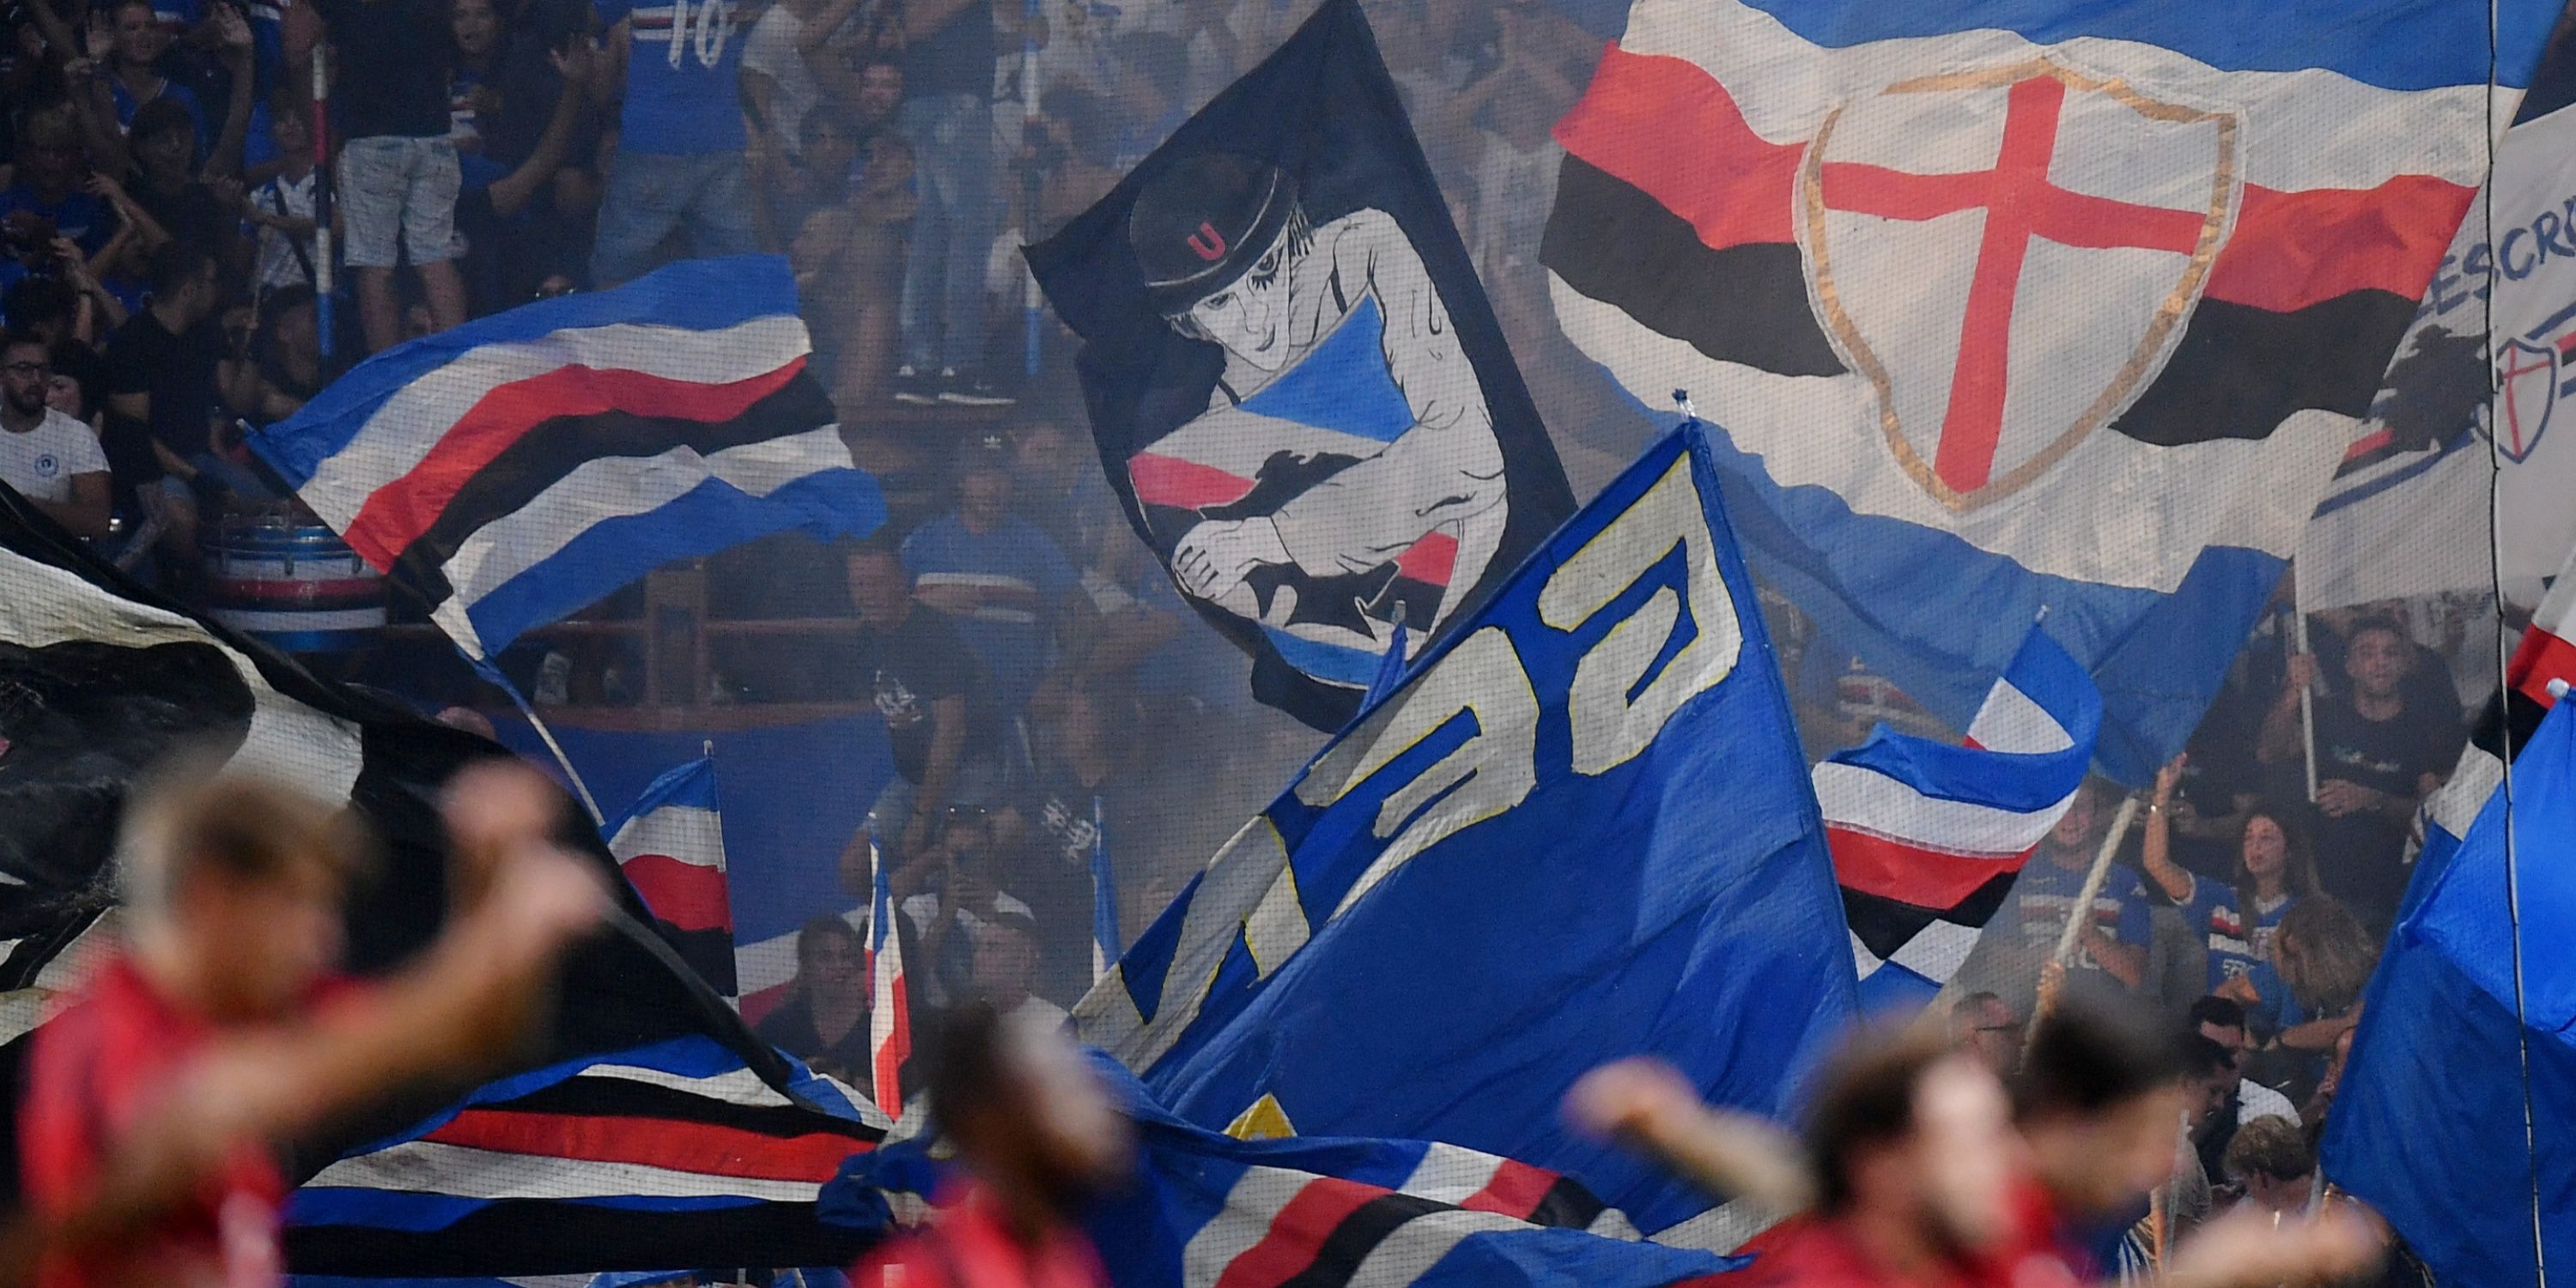 Sampdoria fans waving flags.